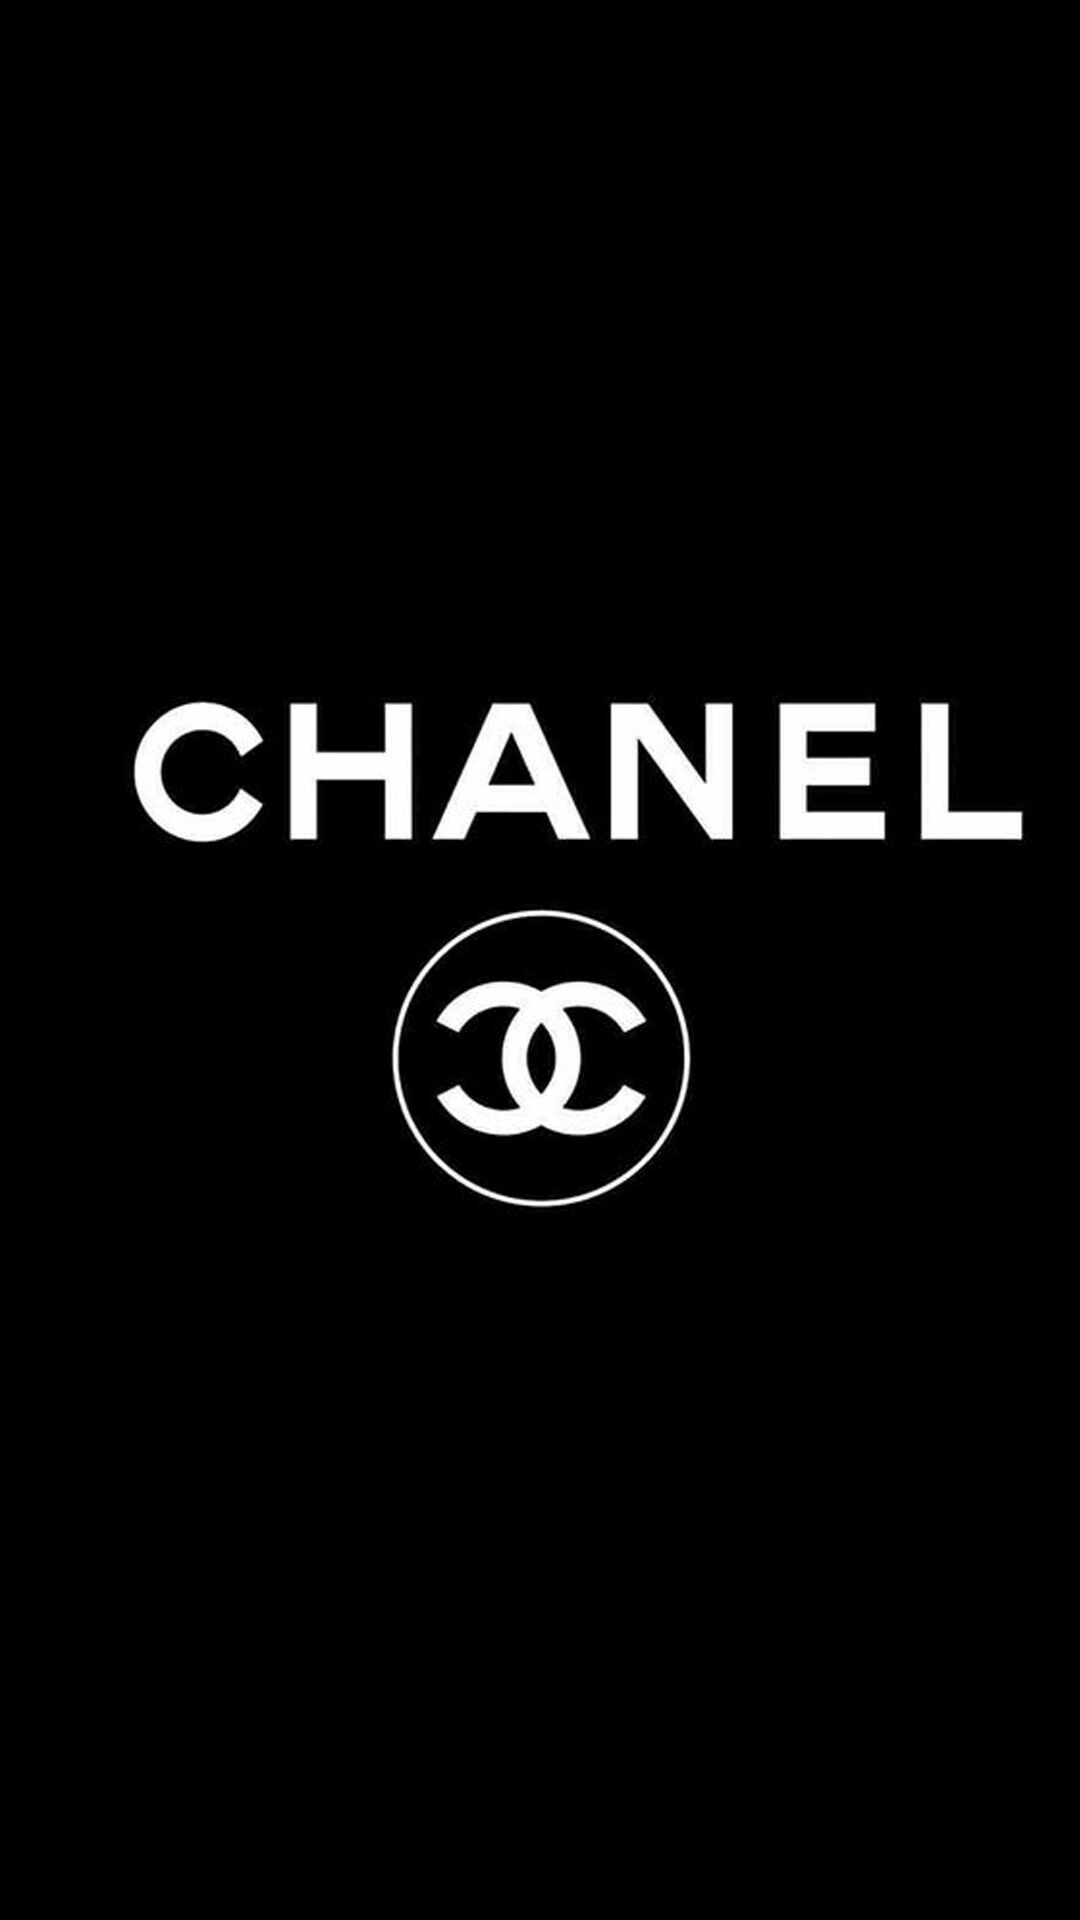 Chanel fashion, Coco Chanel logo, Stylish iPhone wallpapers, Fashionista's choice, 1080x1920 Full HD Phone